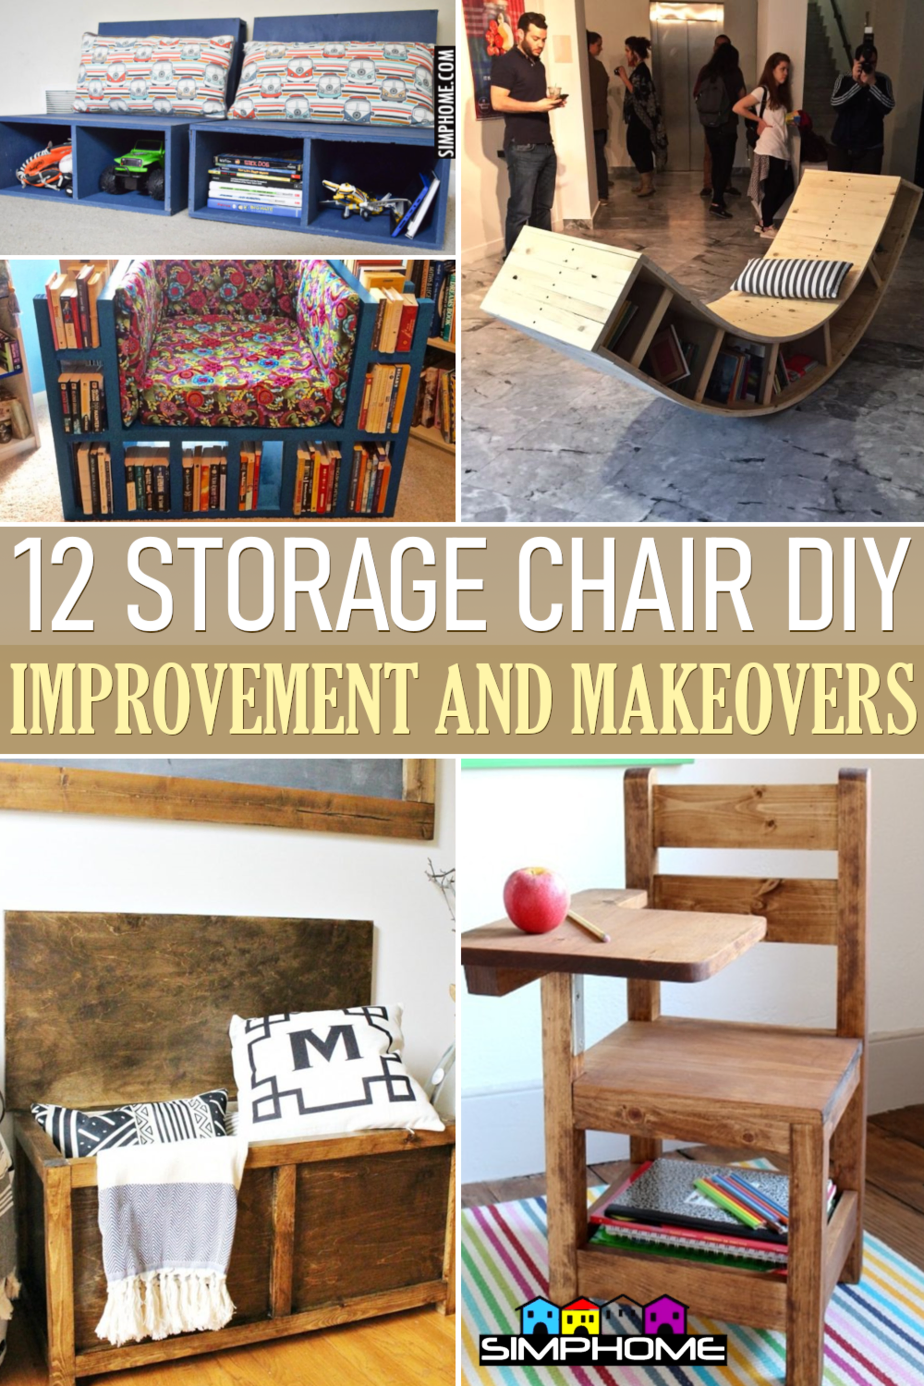 12 Storage Chair DIY Ideas via Simphome.comFeatured